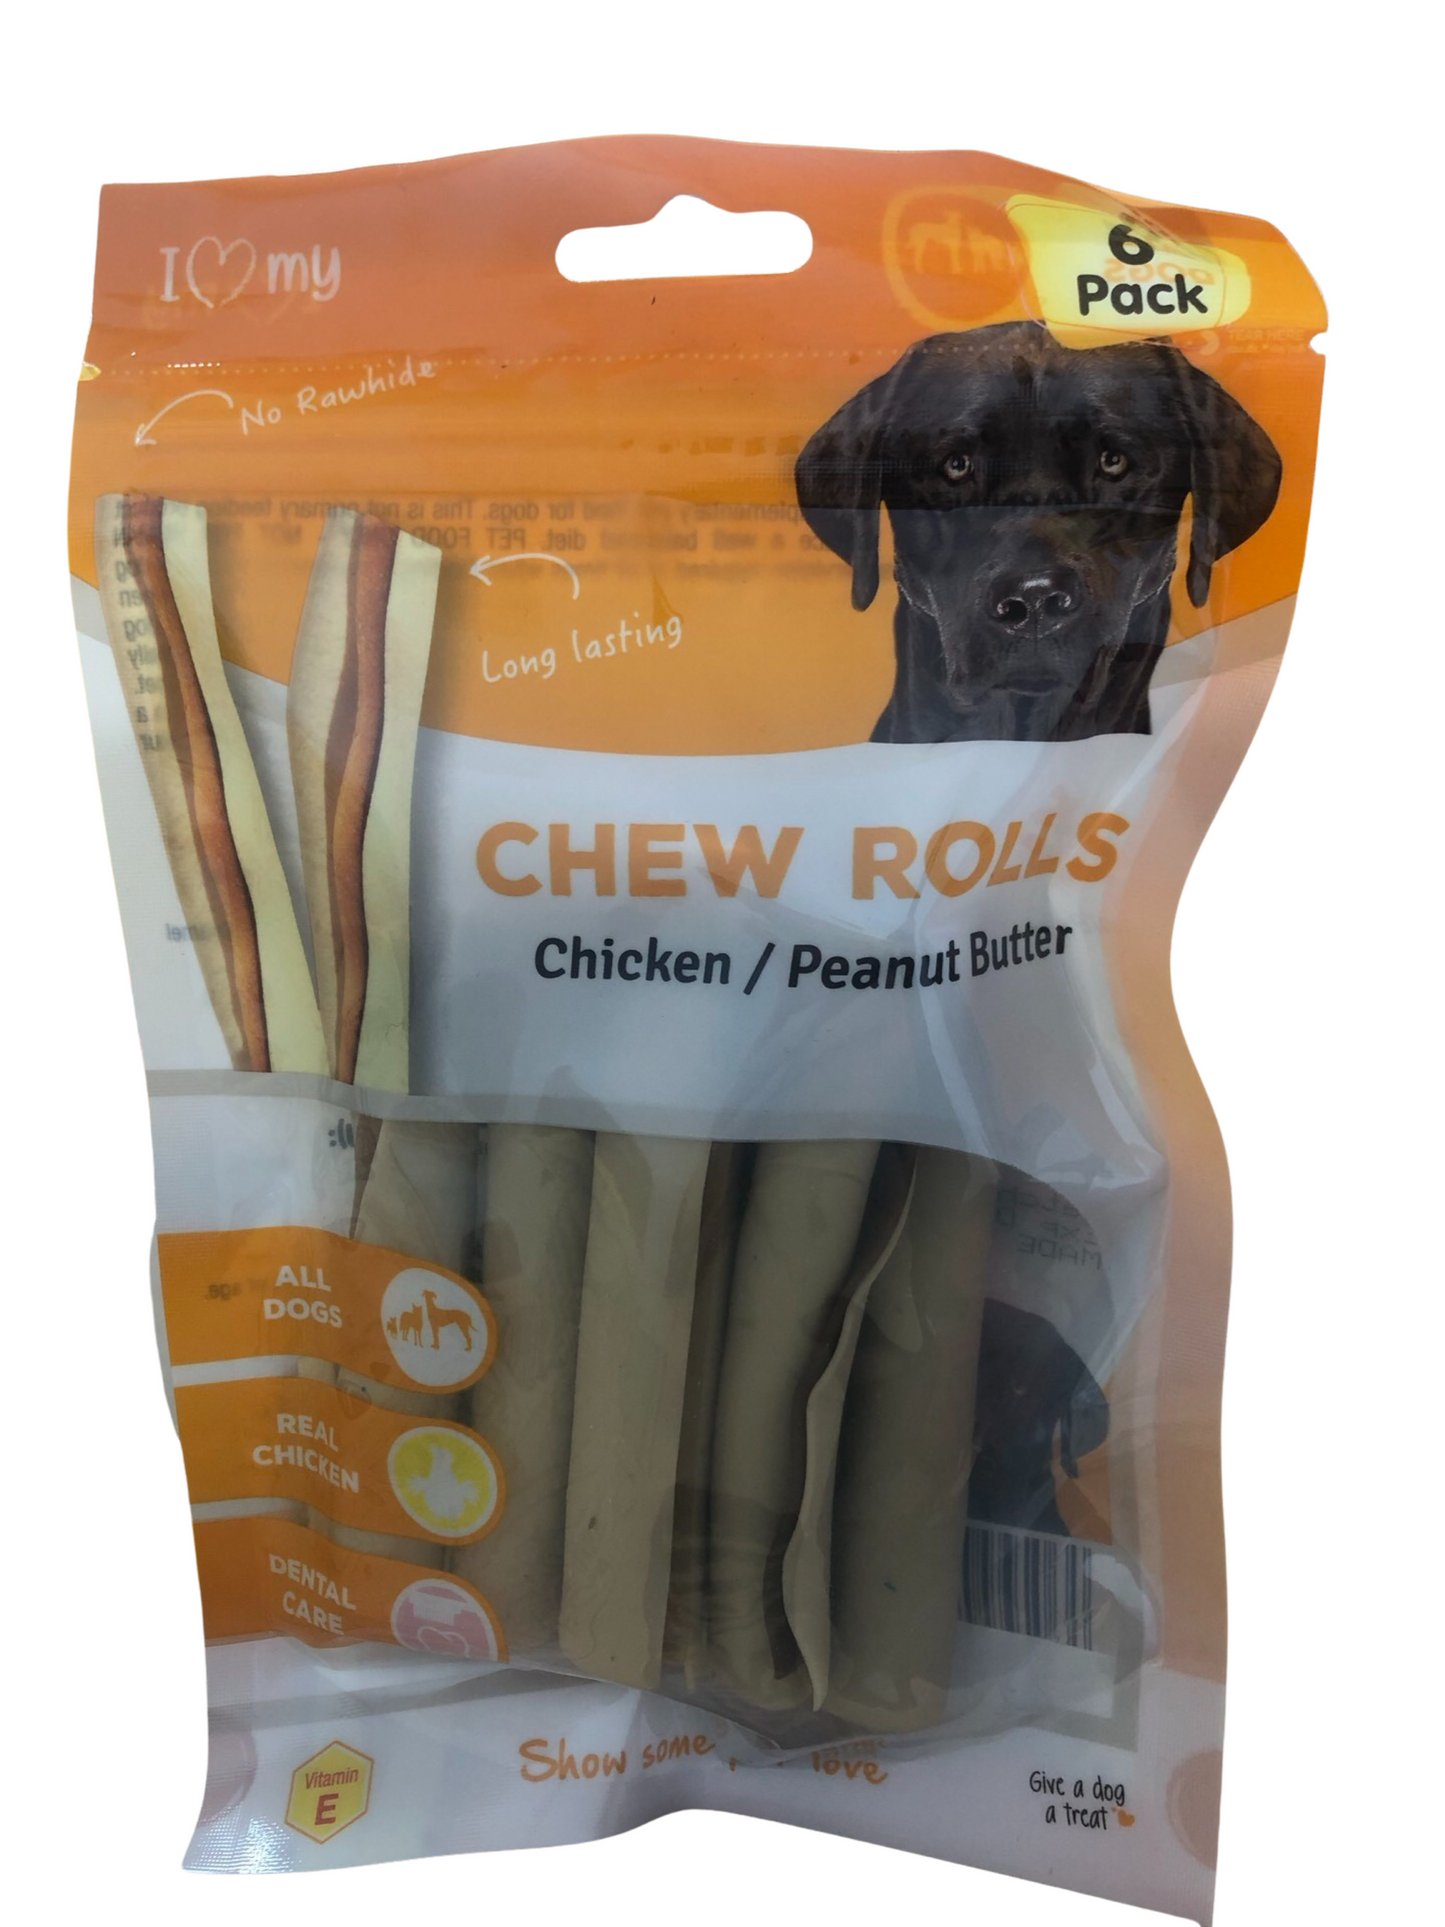 Dog treat chicken / peanut butter chew rolls 6pk